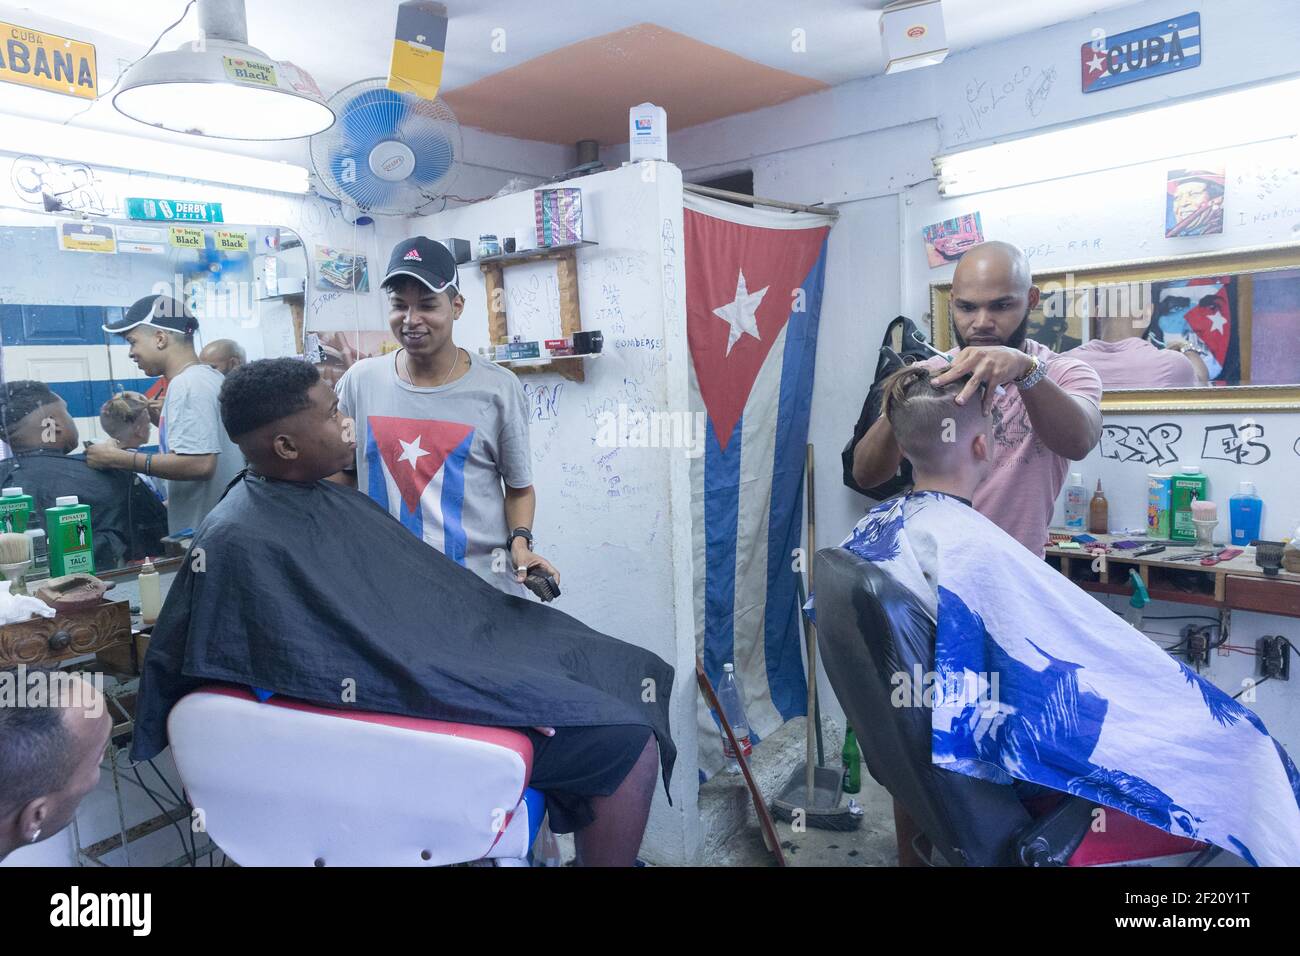 Cuba, Havana - Customers get their hair cut inside a barbershop Stock Photo